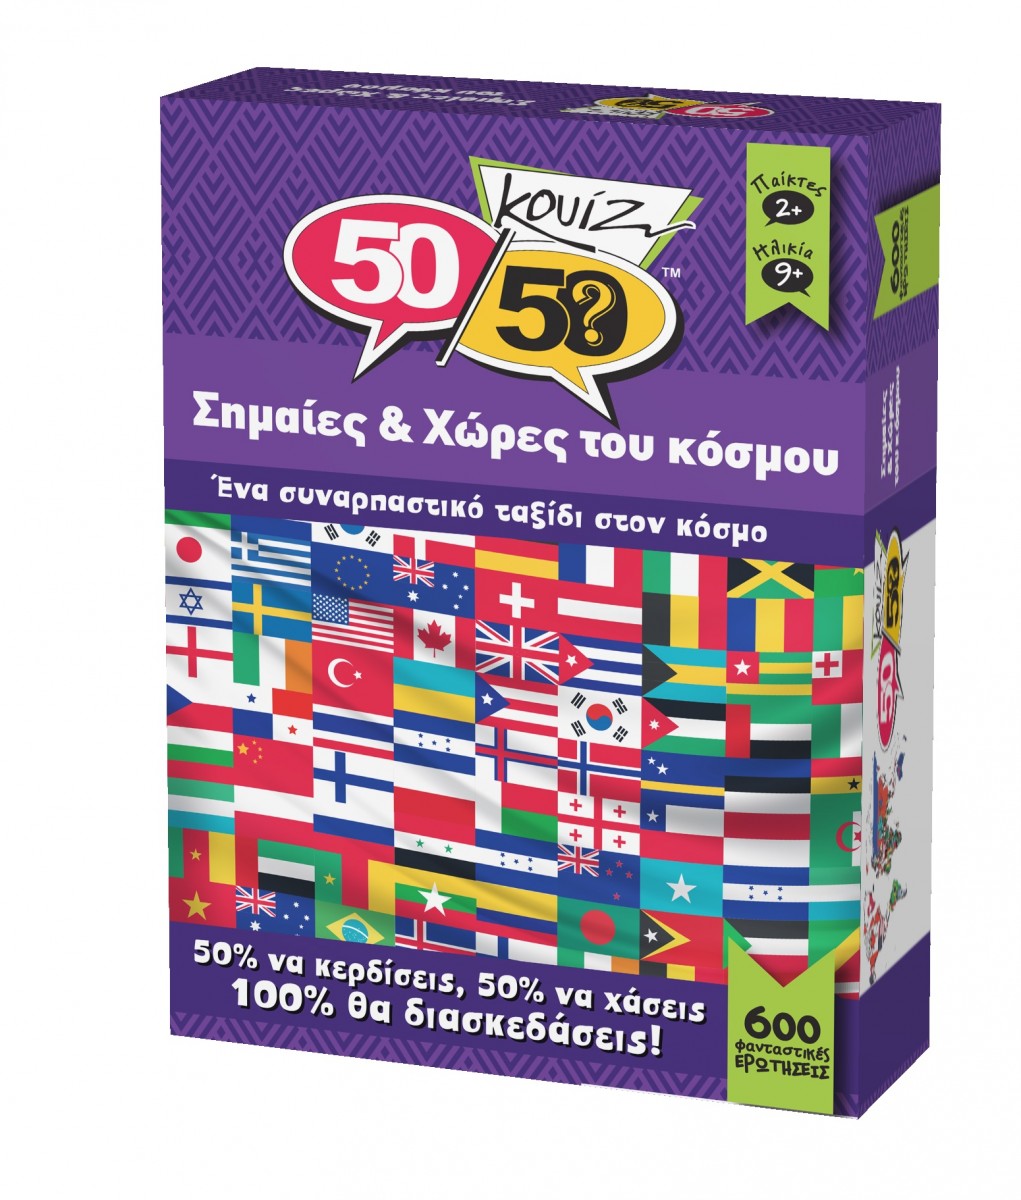 50/50 Games – Επιτραπέζιο – Κουίζ Σημαίες & Χώρες Του Κόσμου 505005